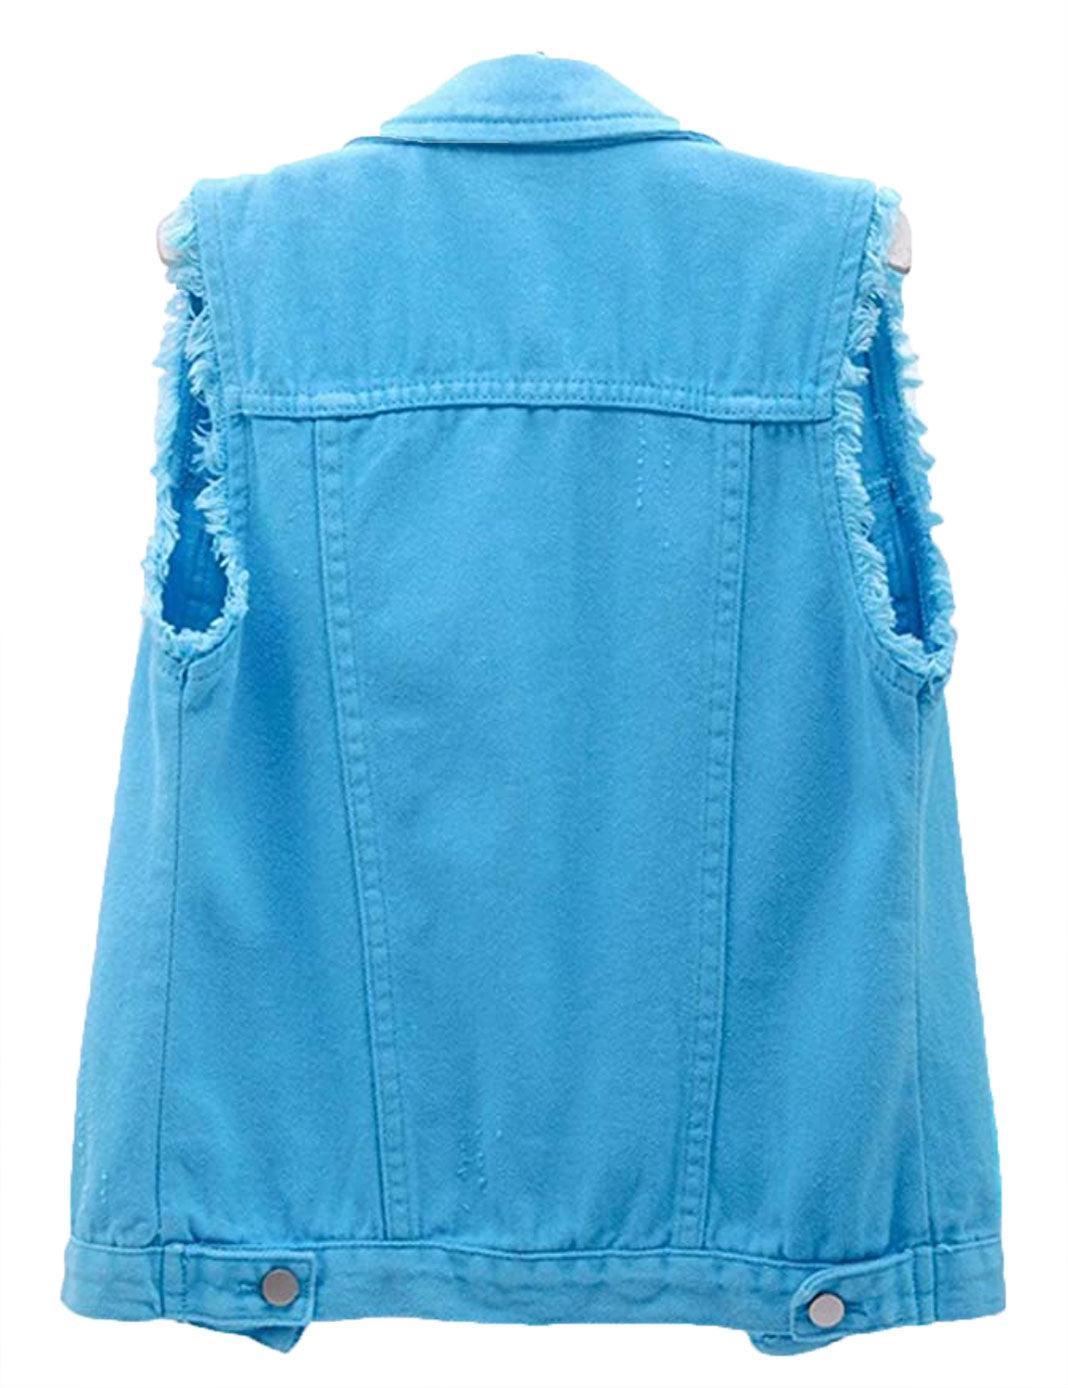 Distressed Sleeveless Denim Jacket Vest (Women's) - Constantly Create Shop